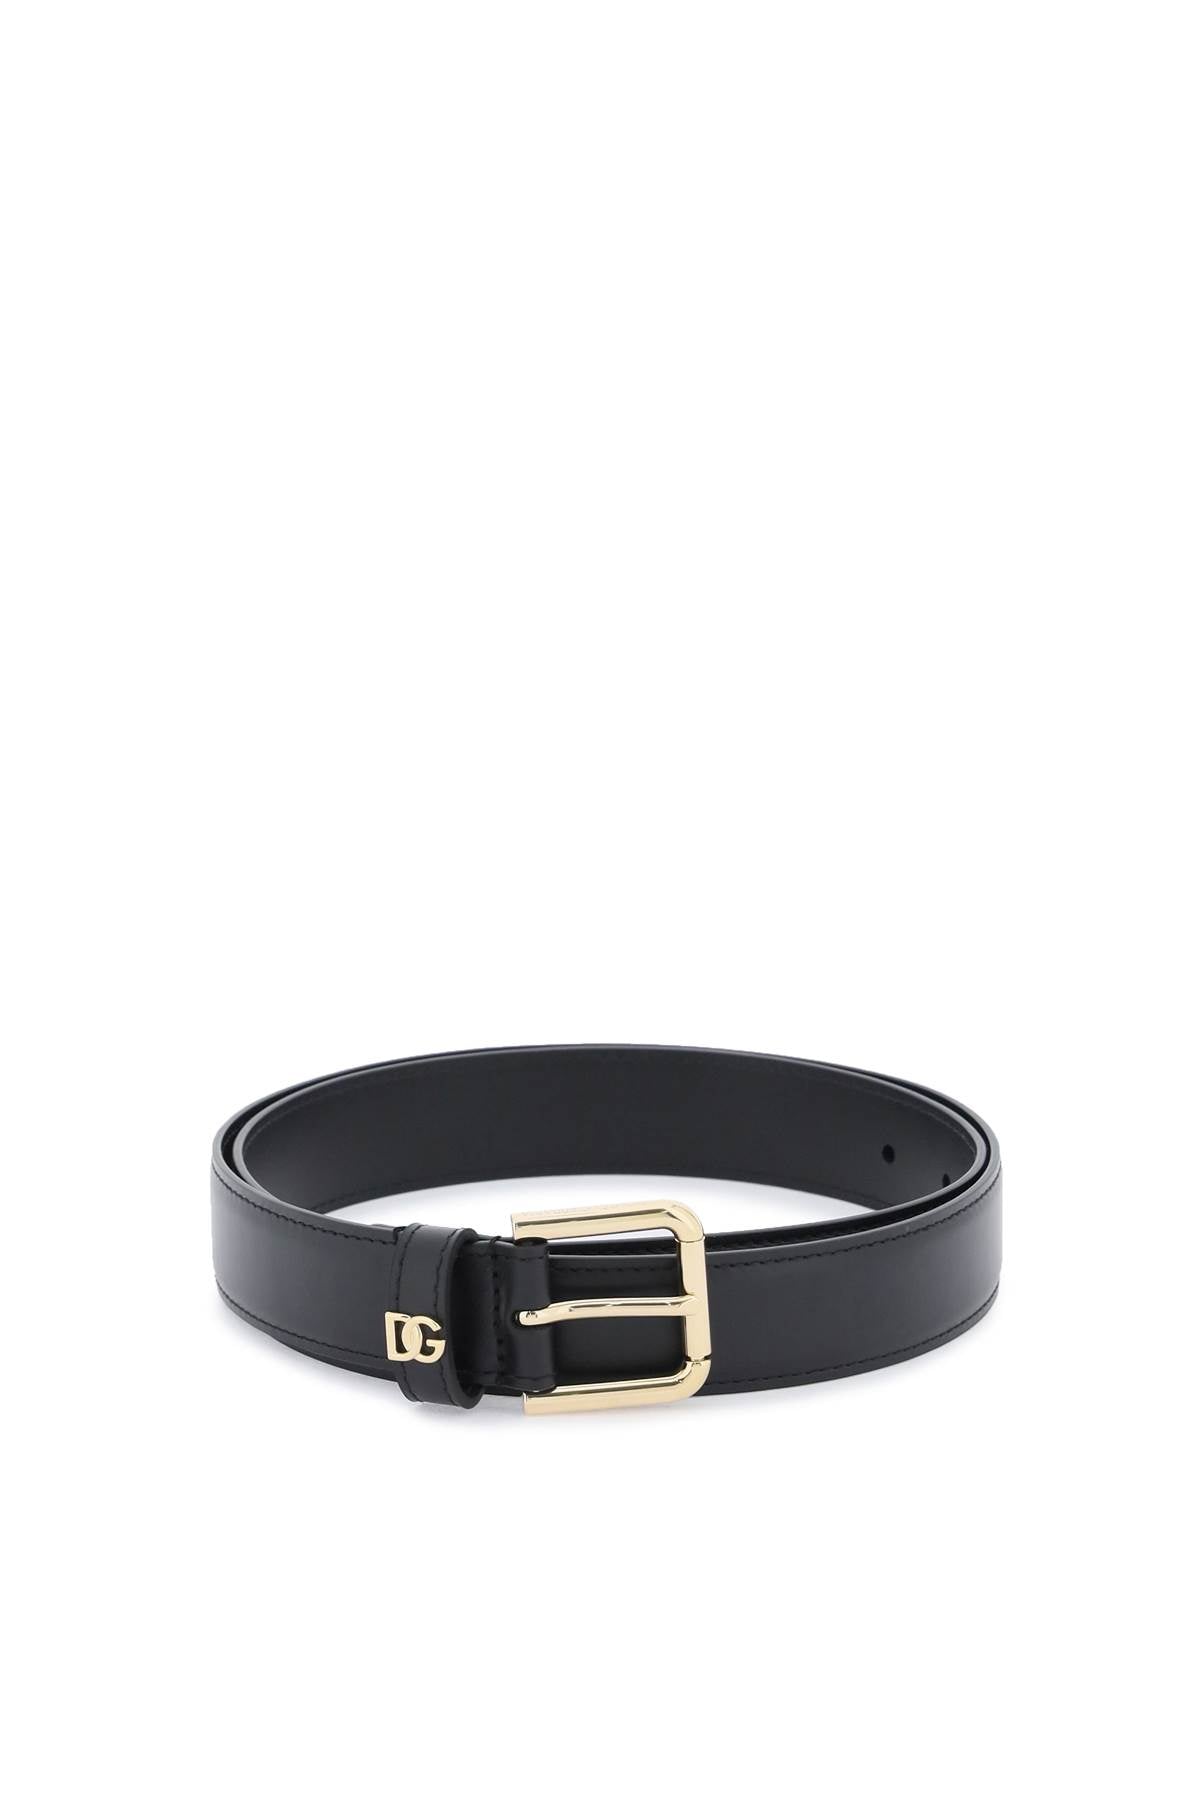 dg logo leather belt